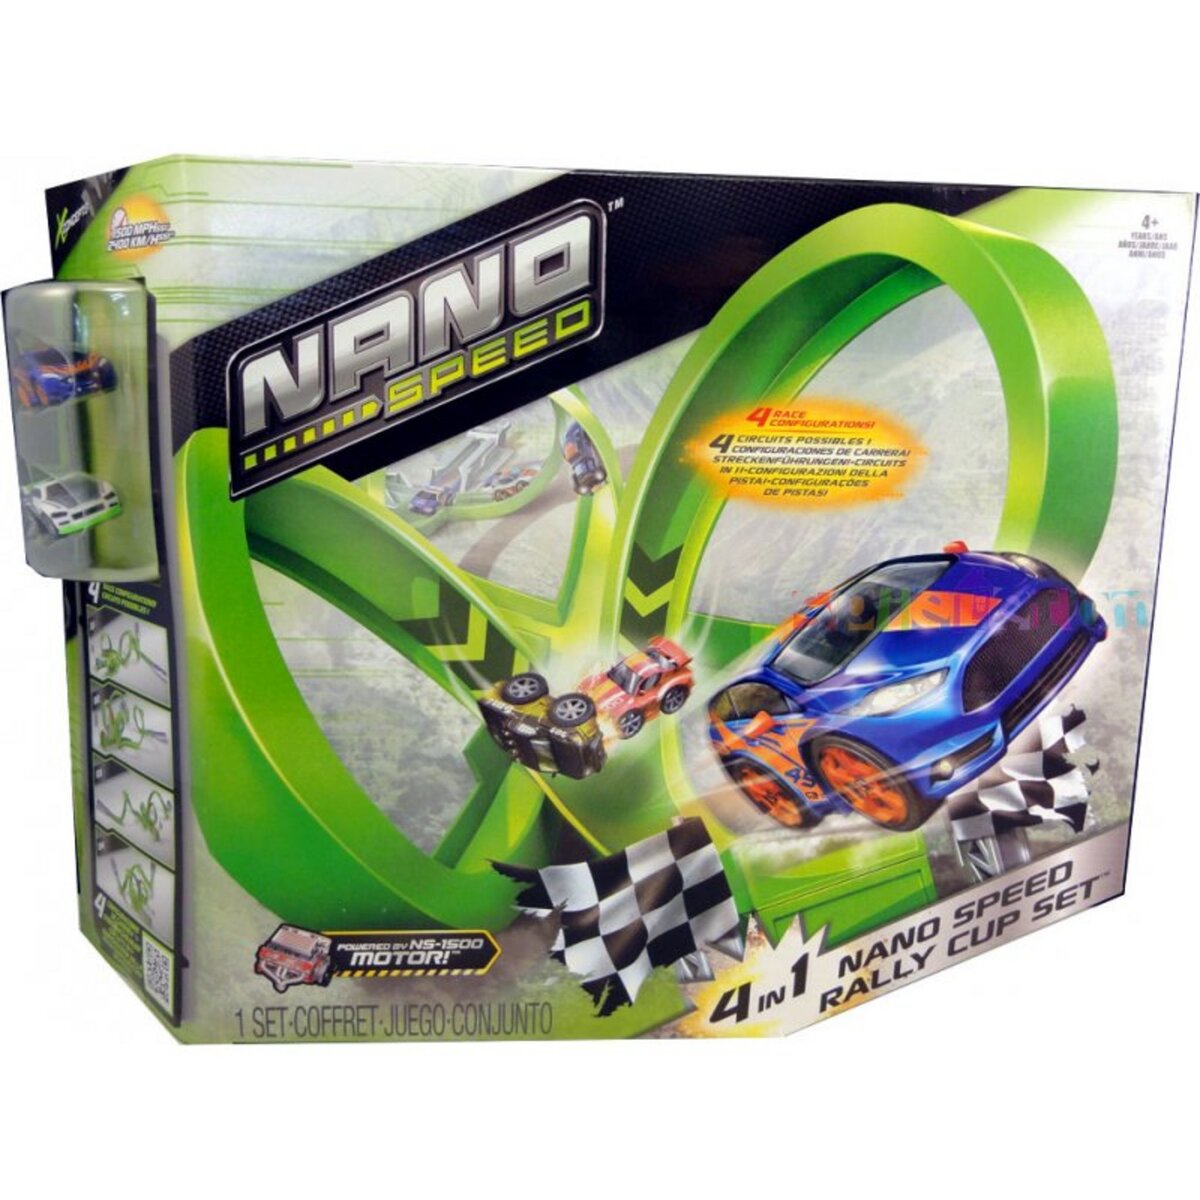 NANO SPEED Nano Speed, Rally Cup Set